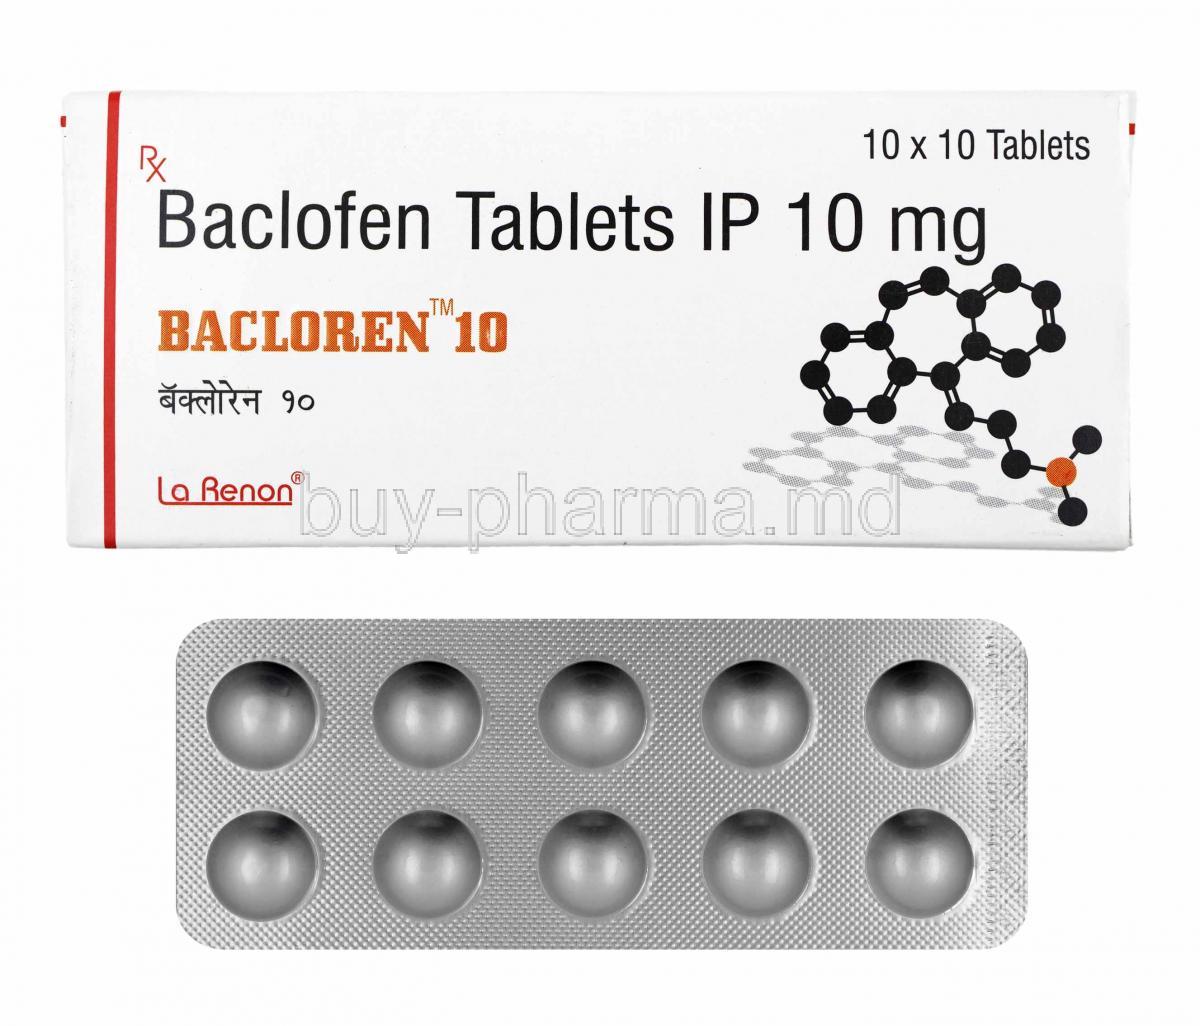 Bacloren, Baclofen 10mg box and tablets